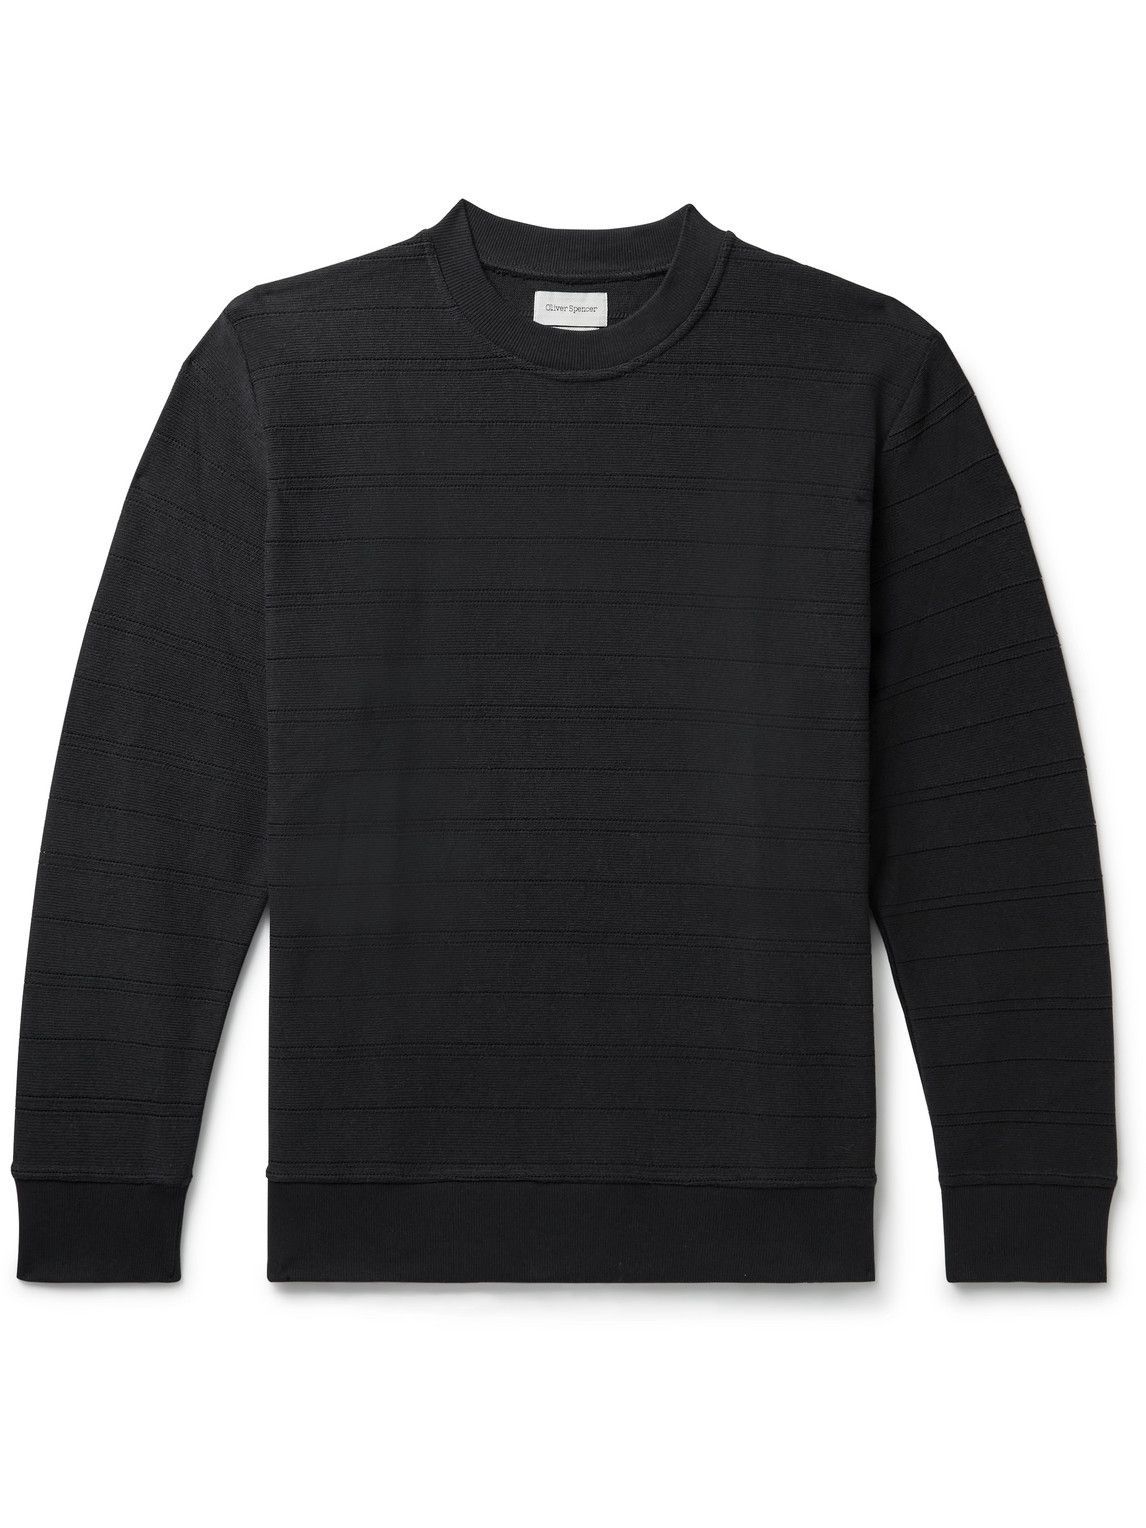 Oliver Spencer - Clemson Organic Cotton-Jersey Sweatshirt - Black